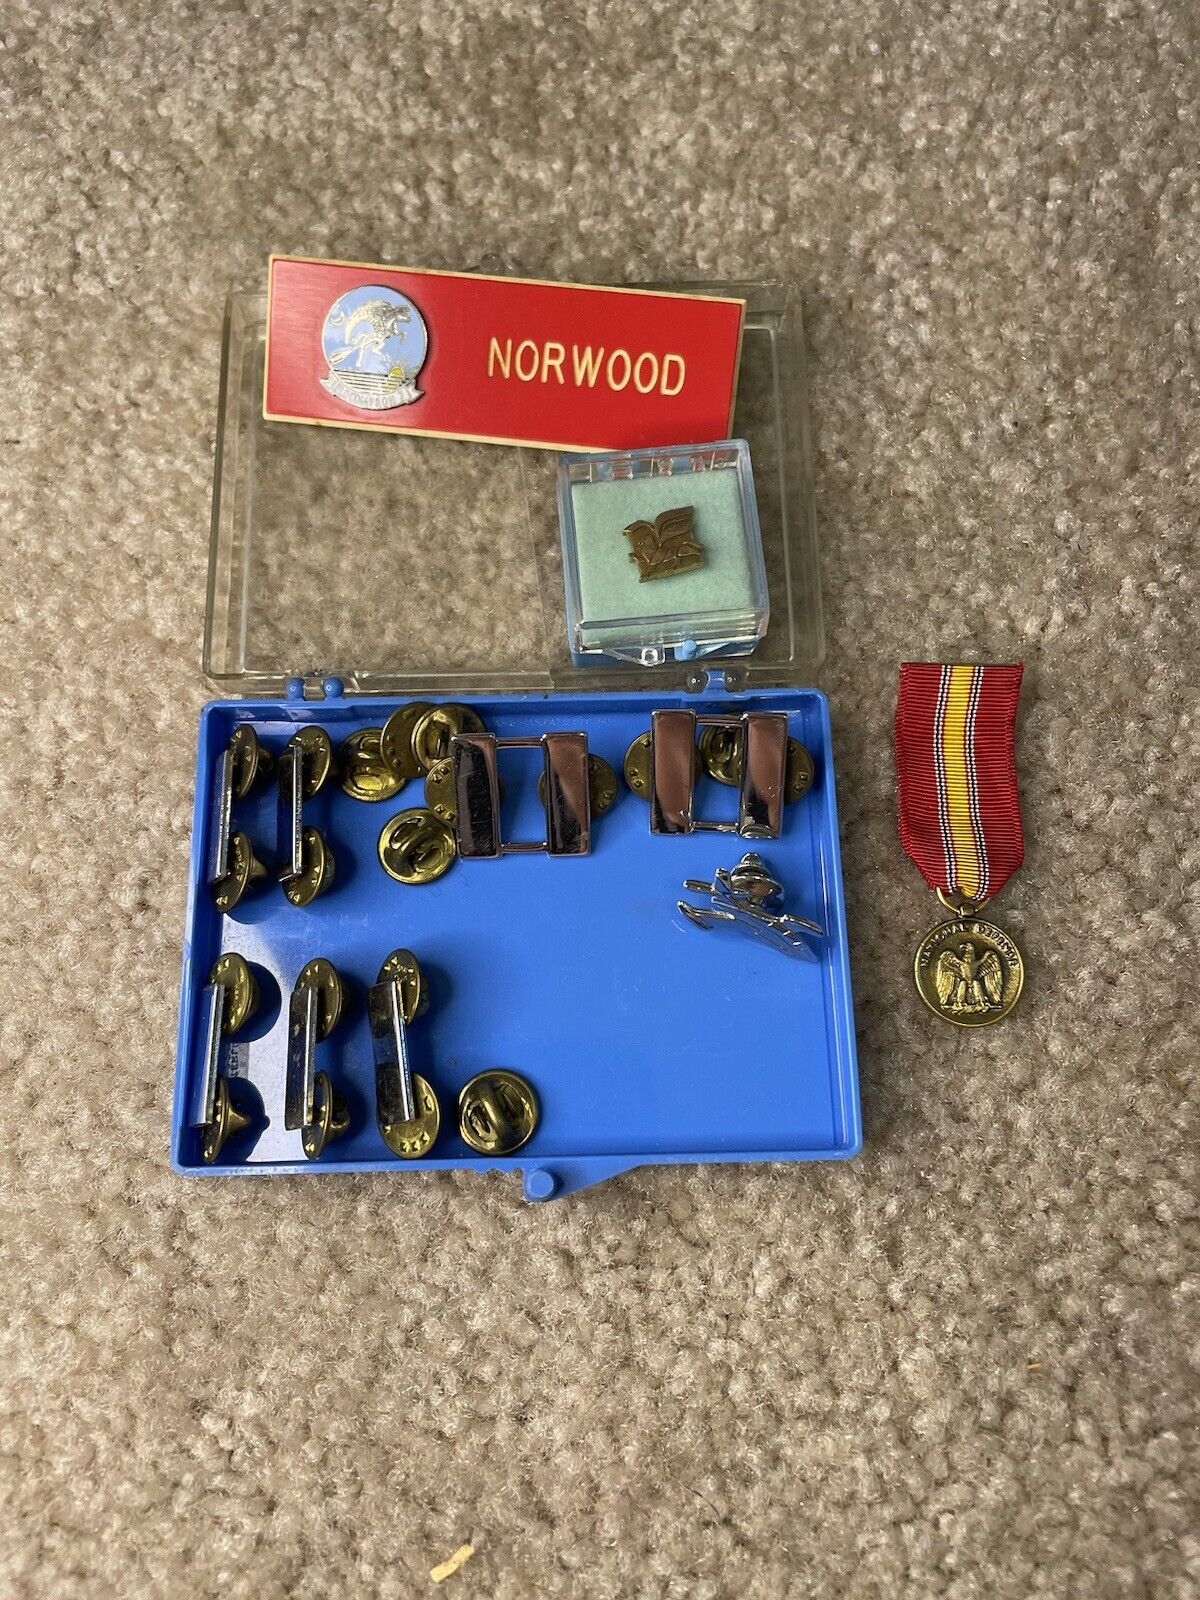 Vintage Pins And Medal/name tag